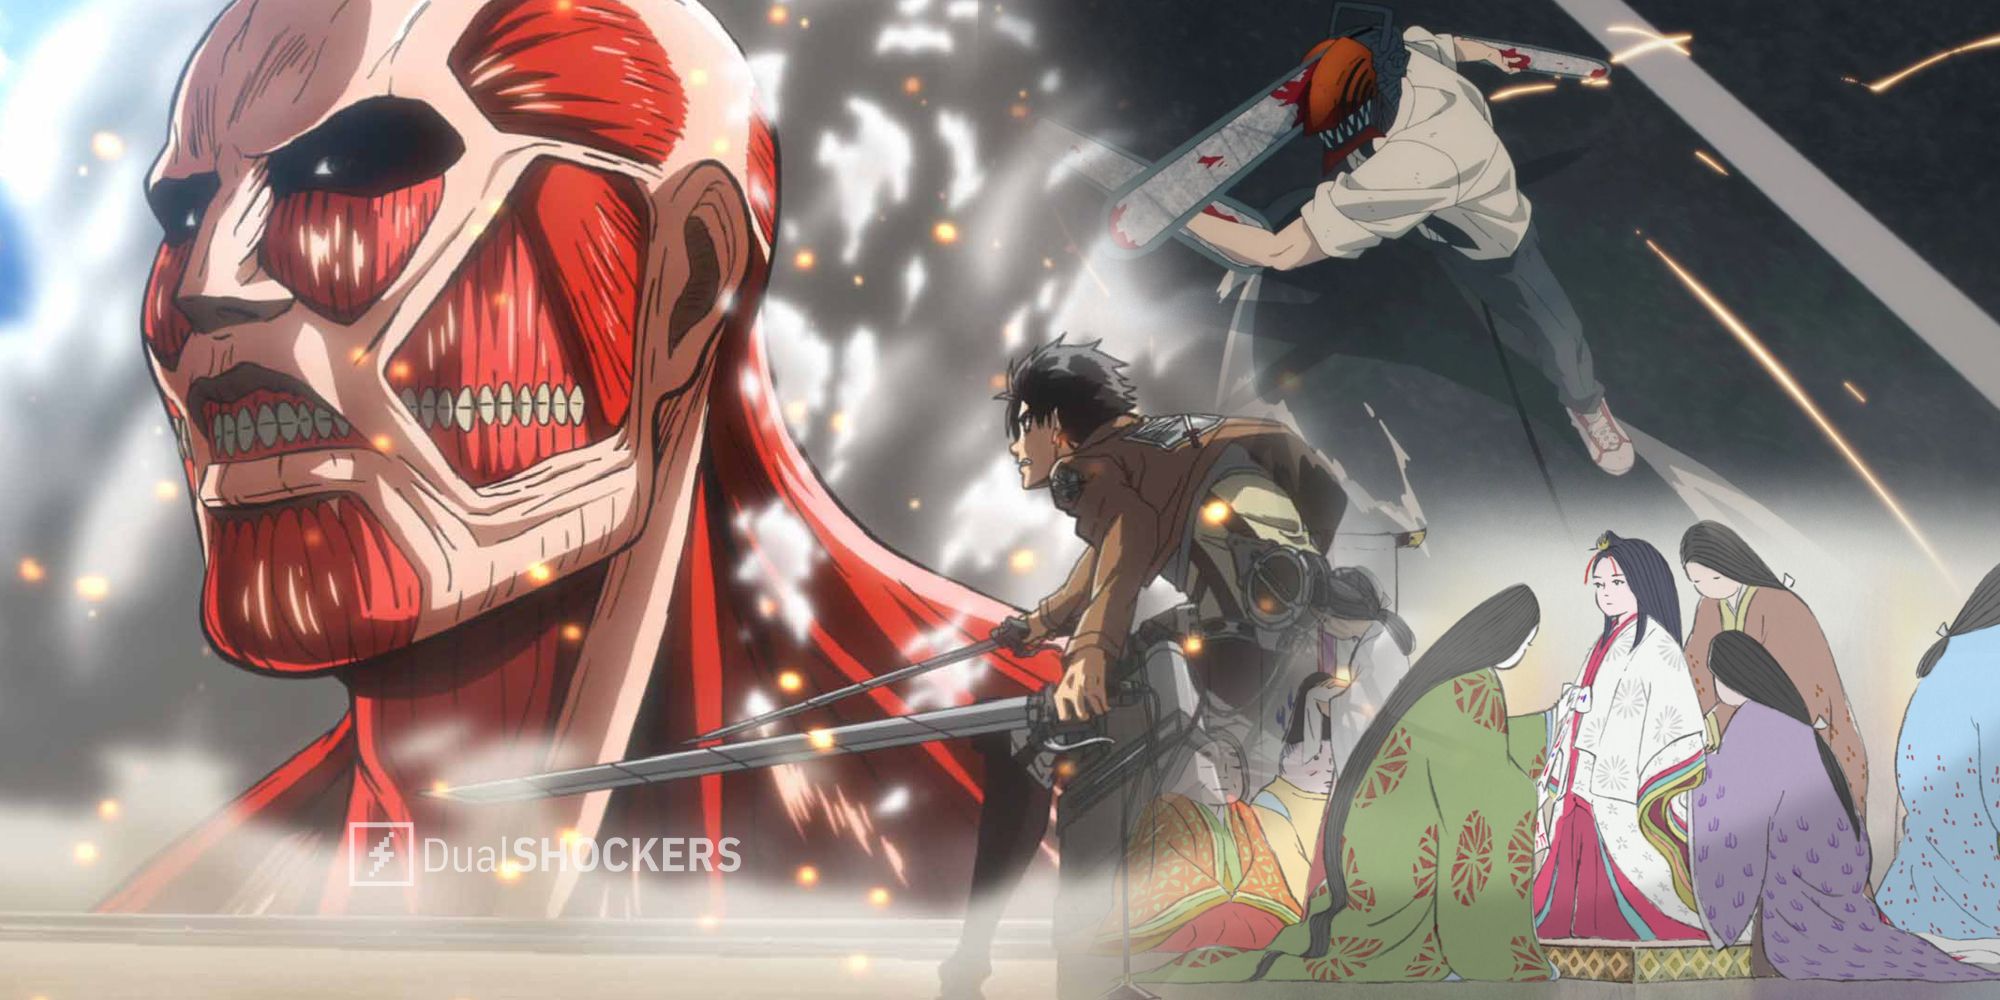 Attack On Titan, Chainsaw Man, The Tale Of Princess Kaguya anime